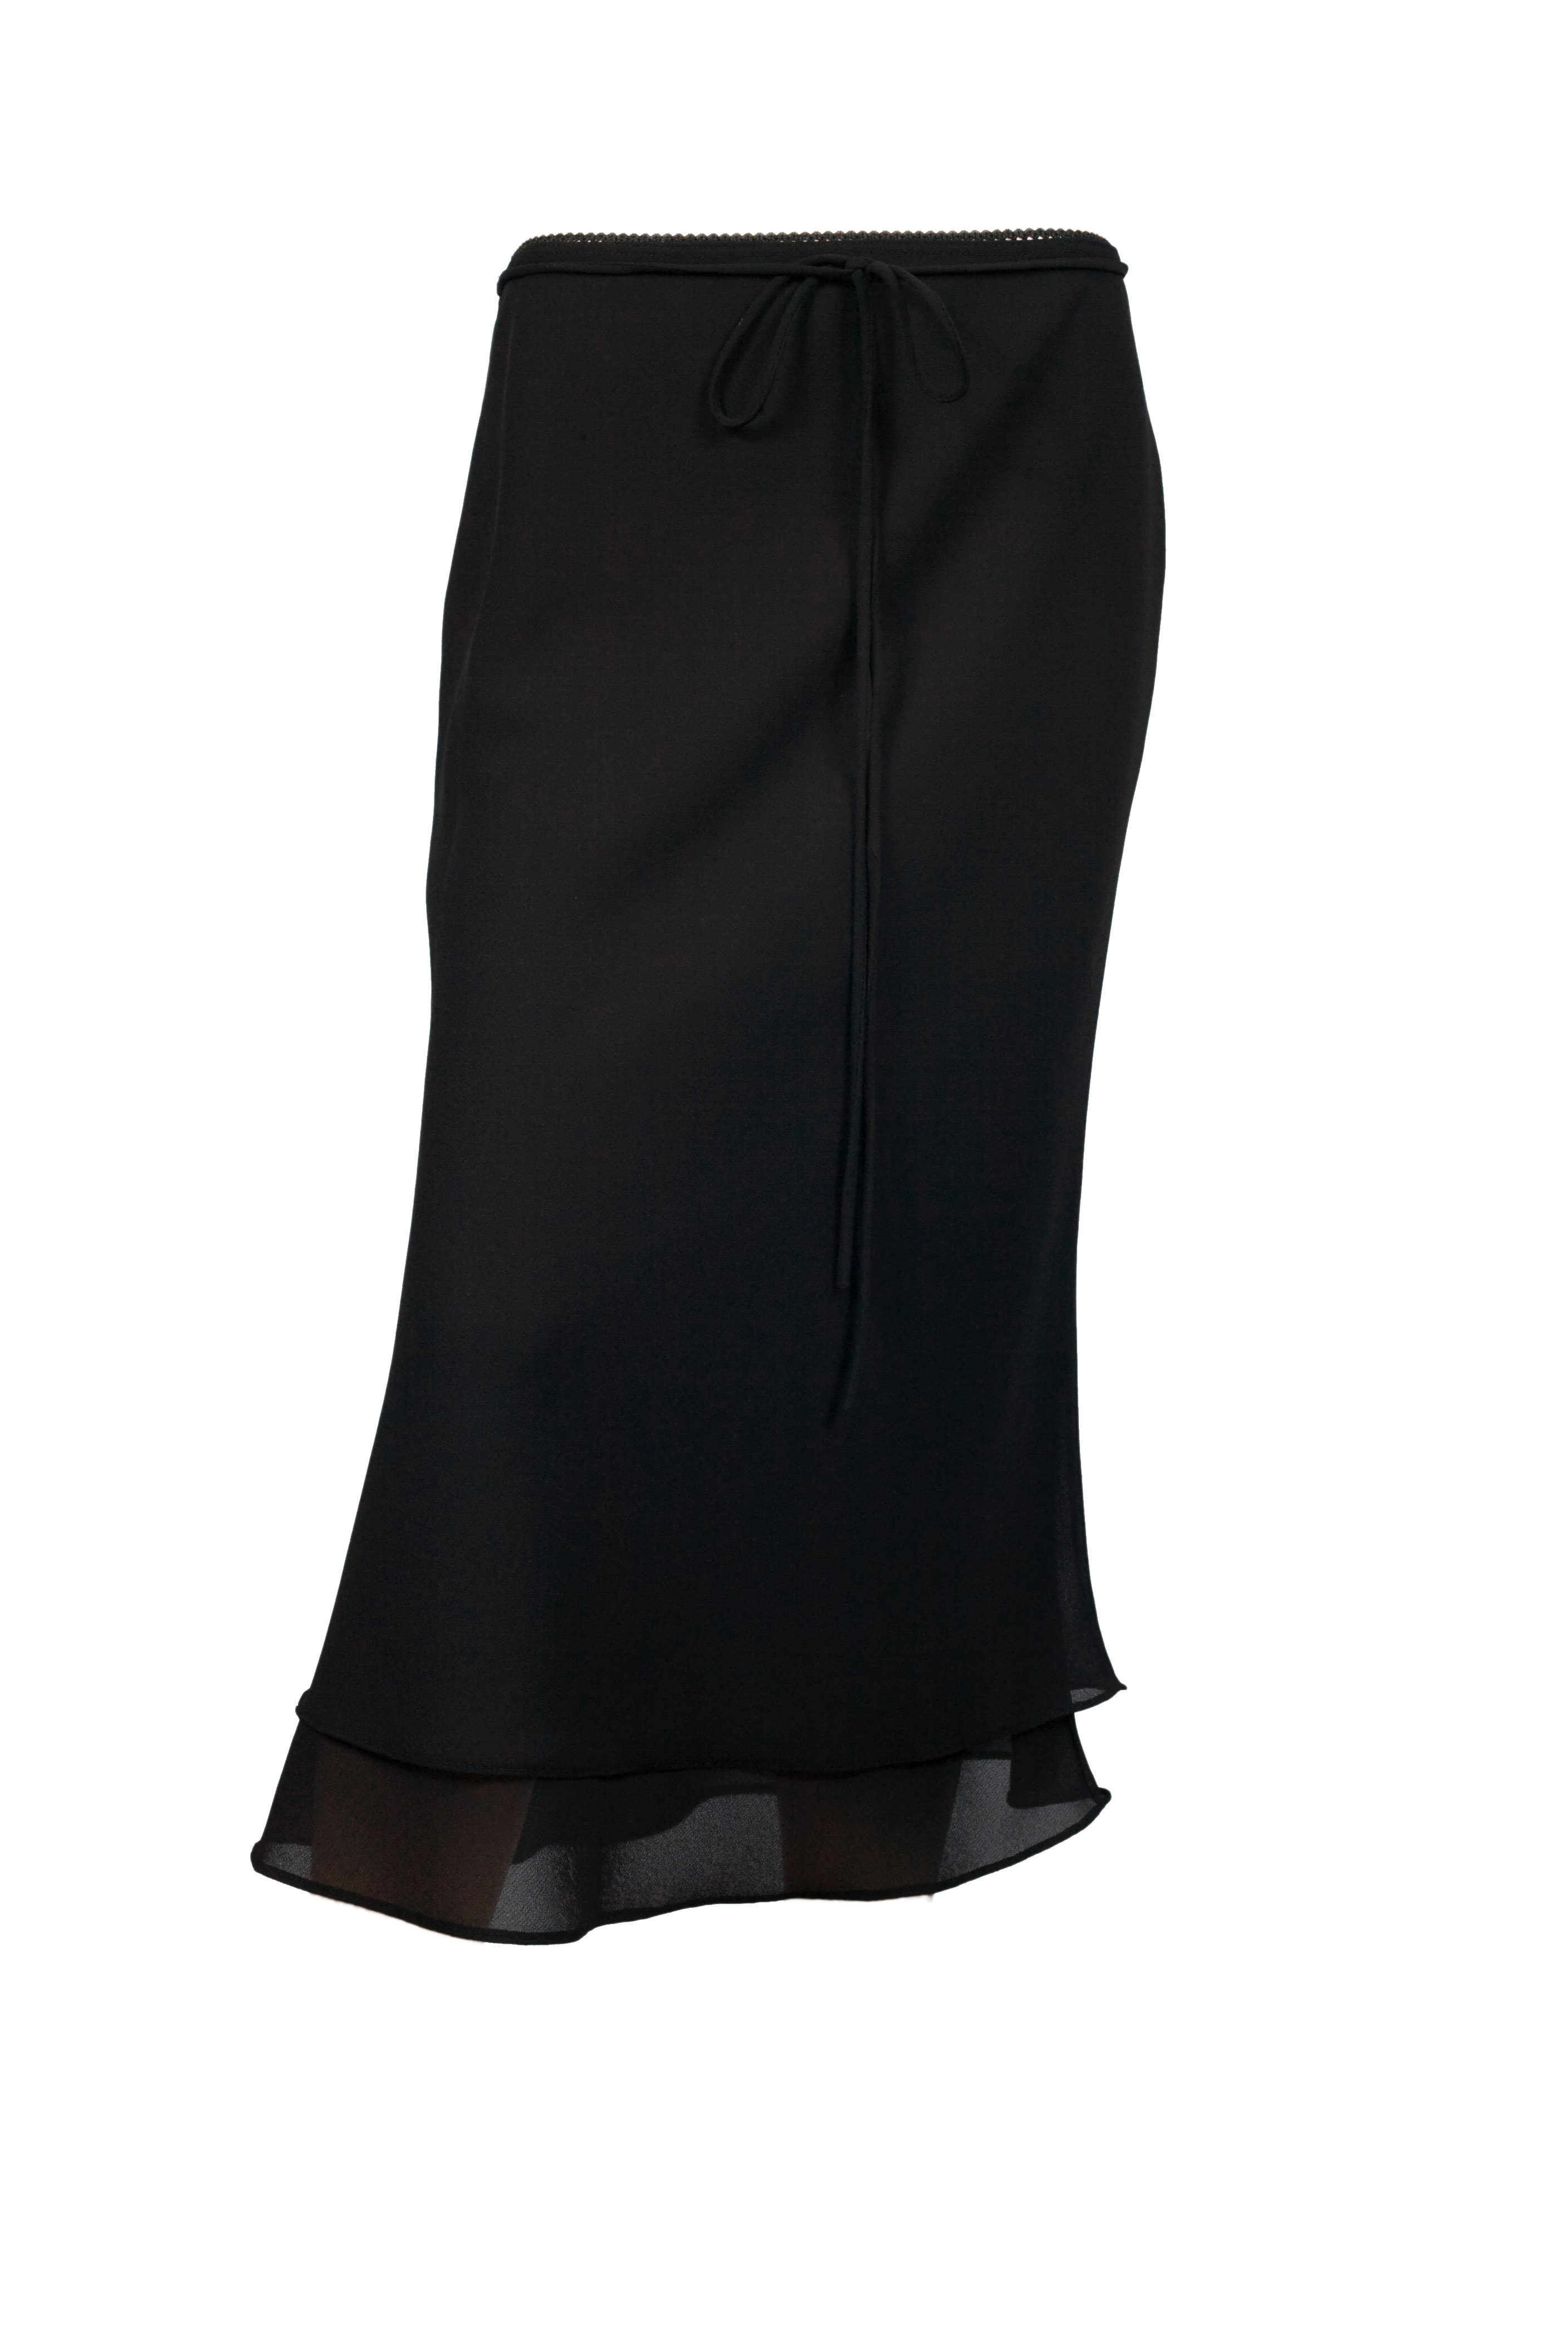 Black Layered Plus size long skirt | eVogues Apparel